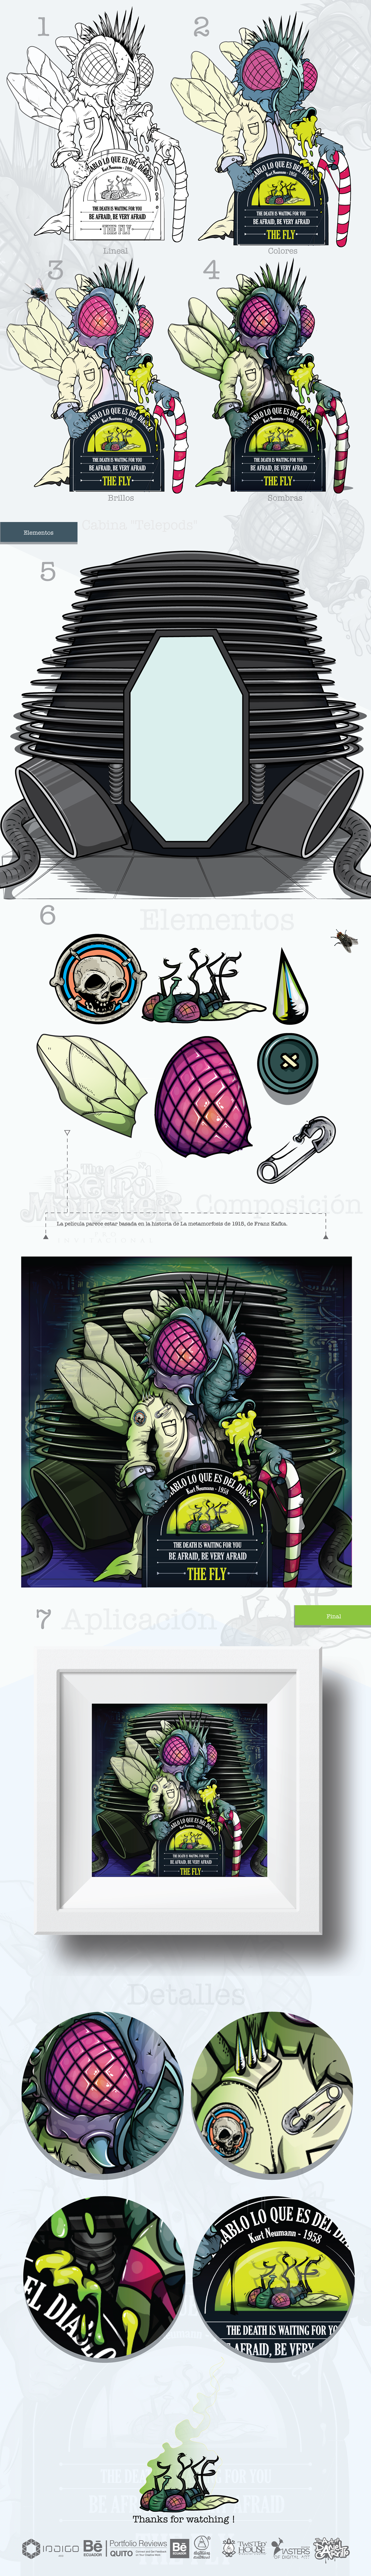 monster The Fly mosca mosco  vector sticker garbaje wacom ilustration Character design digitalart